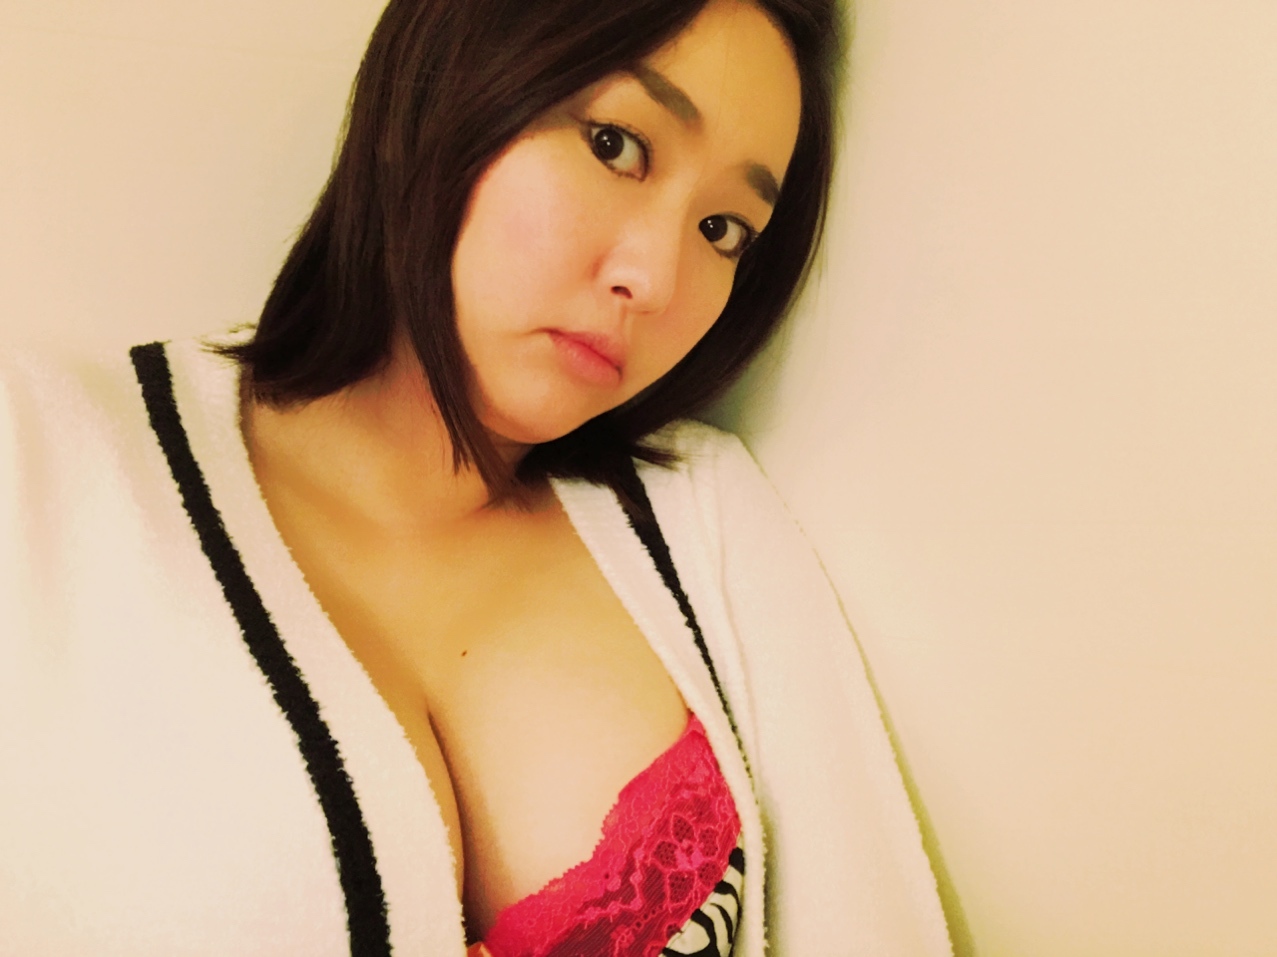 AOI368 - Japanese webcam girl